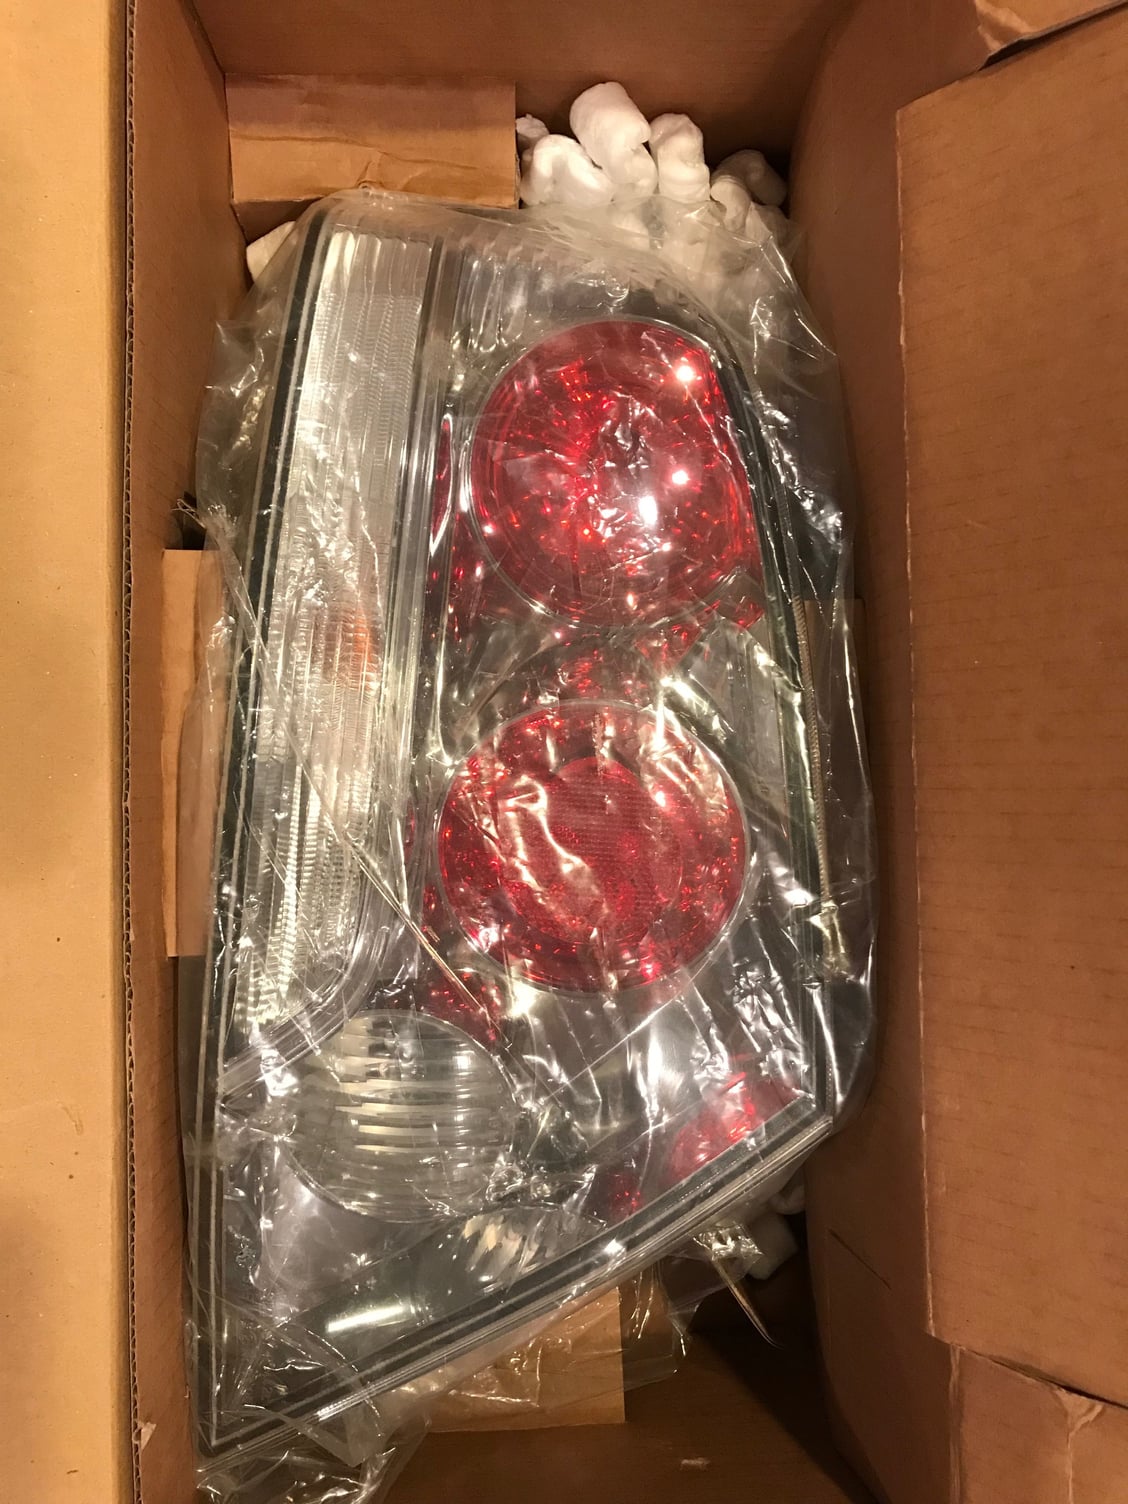 Lights - Evo VIII OEM Taillights - Used - 2003 to 2008 Mitsubishi Lancer Evolution - Yardley, PA 19067, United States